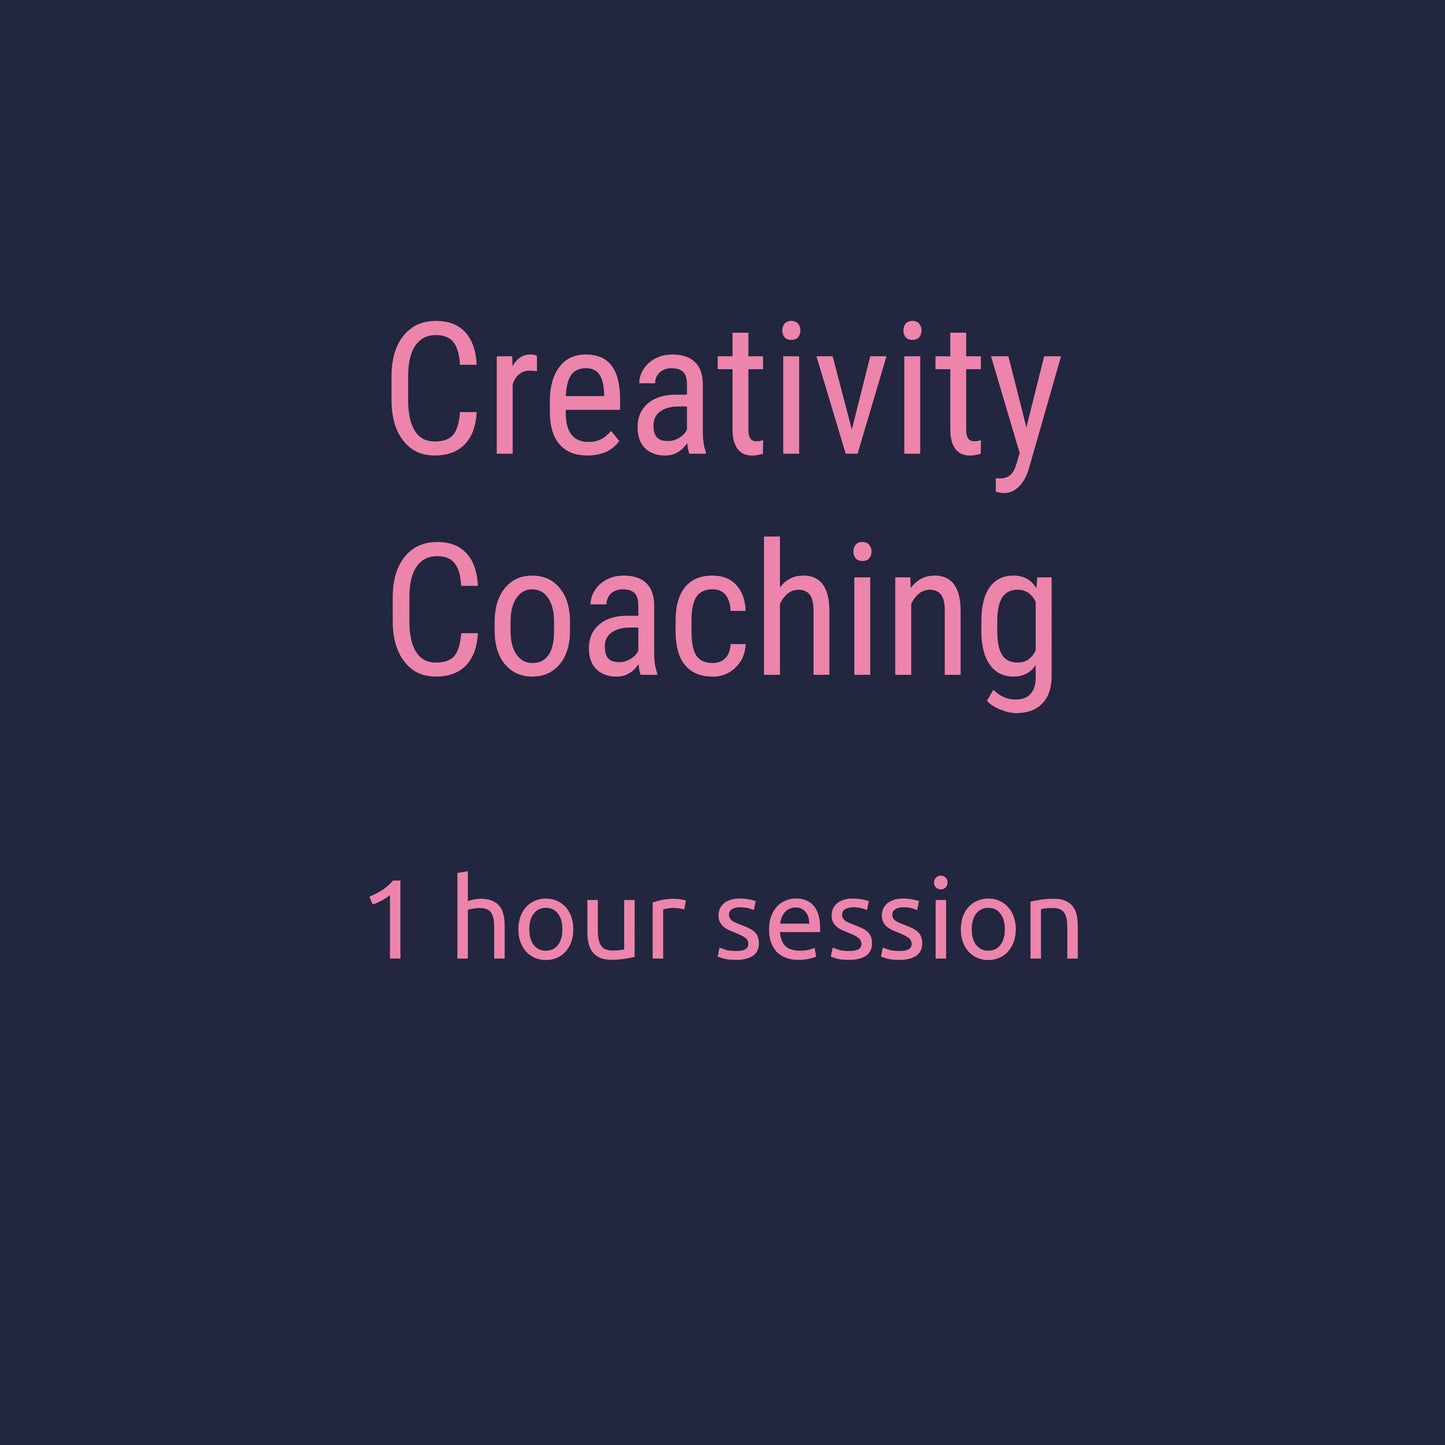 1 creativity coaching session